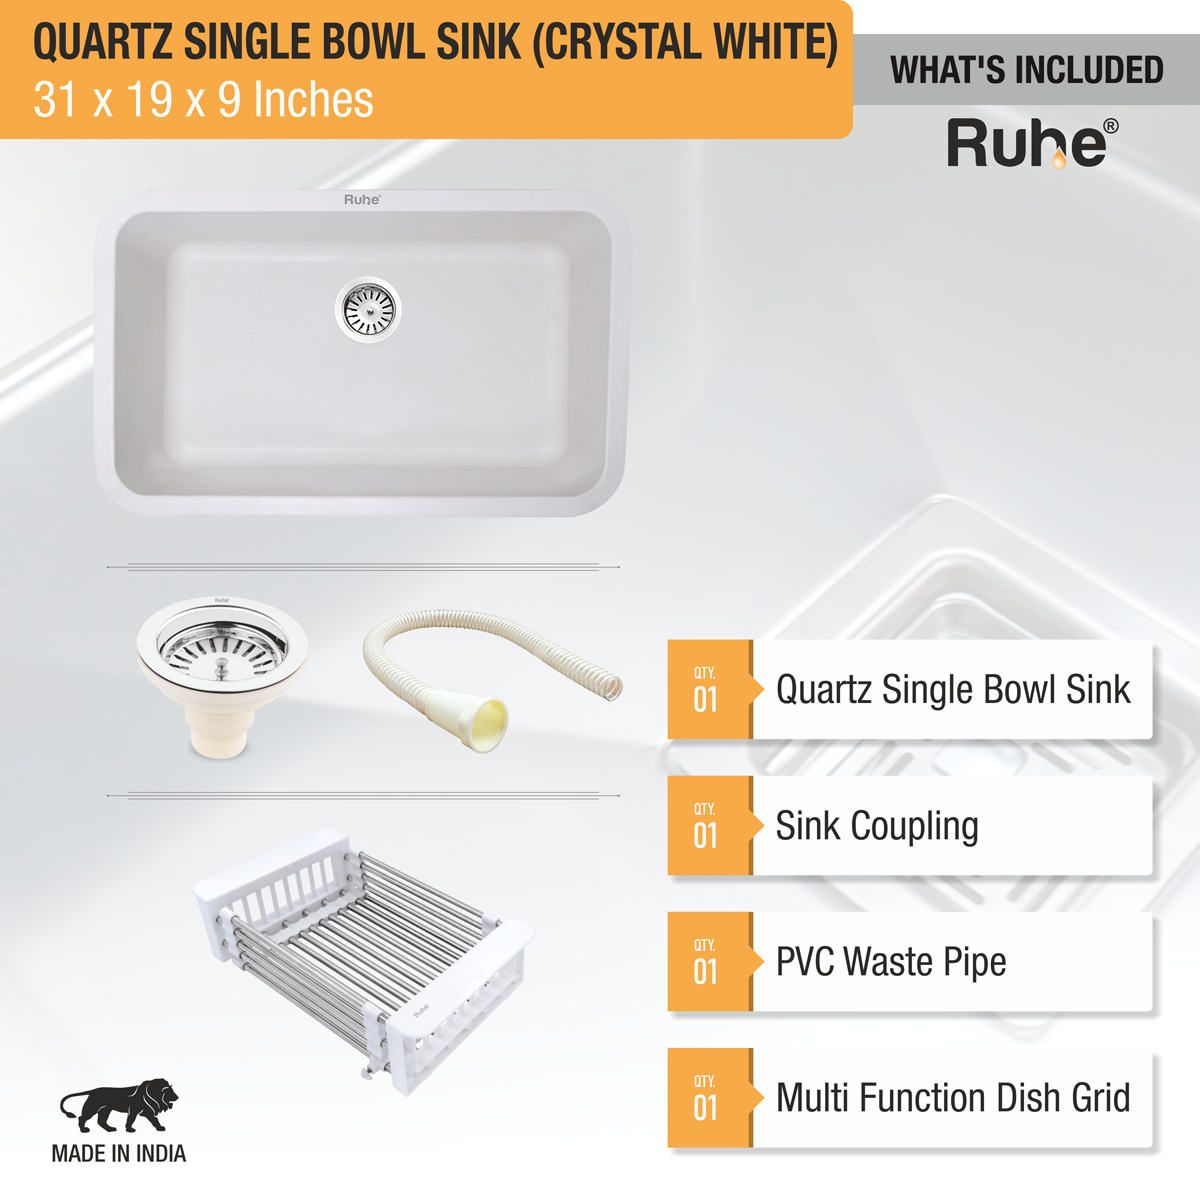 Quartz Single Bowl Kitchen Sink - Crystal White (31 x 19 x 9 inches) - by Ruhe®